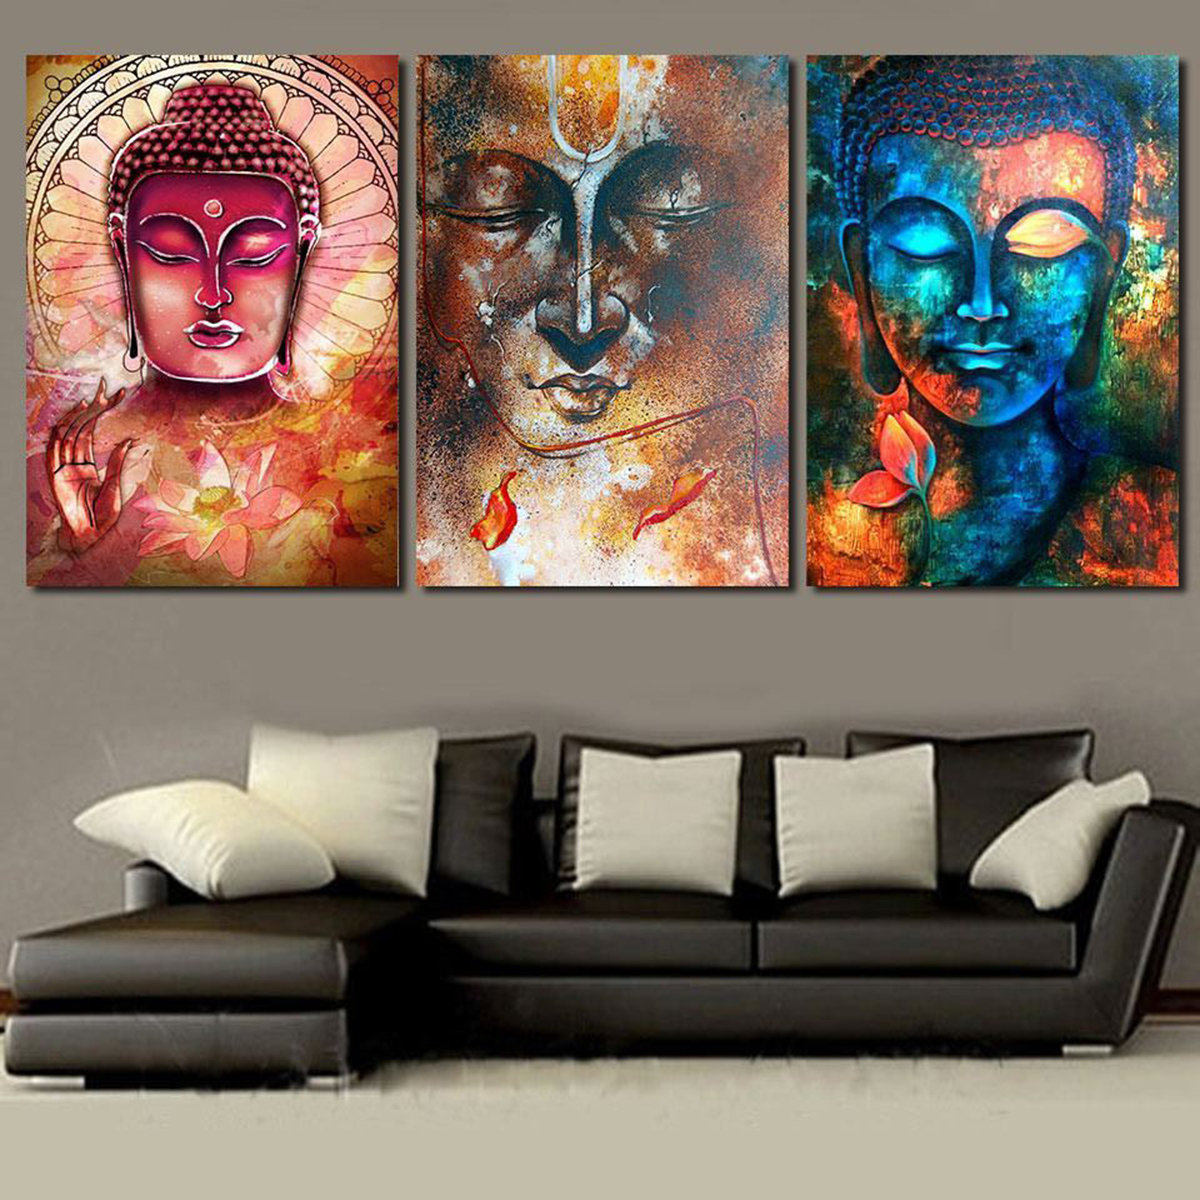 

3Pcs Buddhas Canvas Painting Frameless Wall Art Bedroom Living Room Home Decor